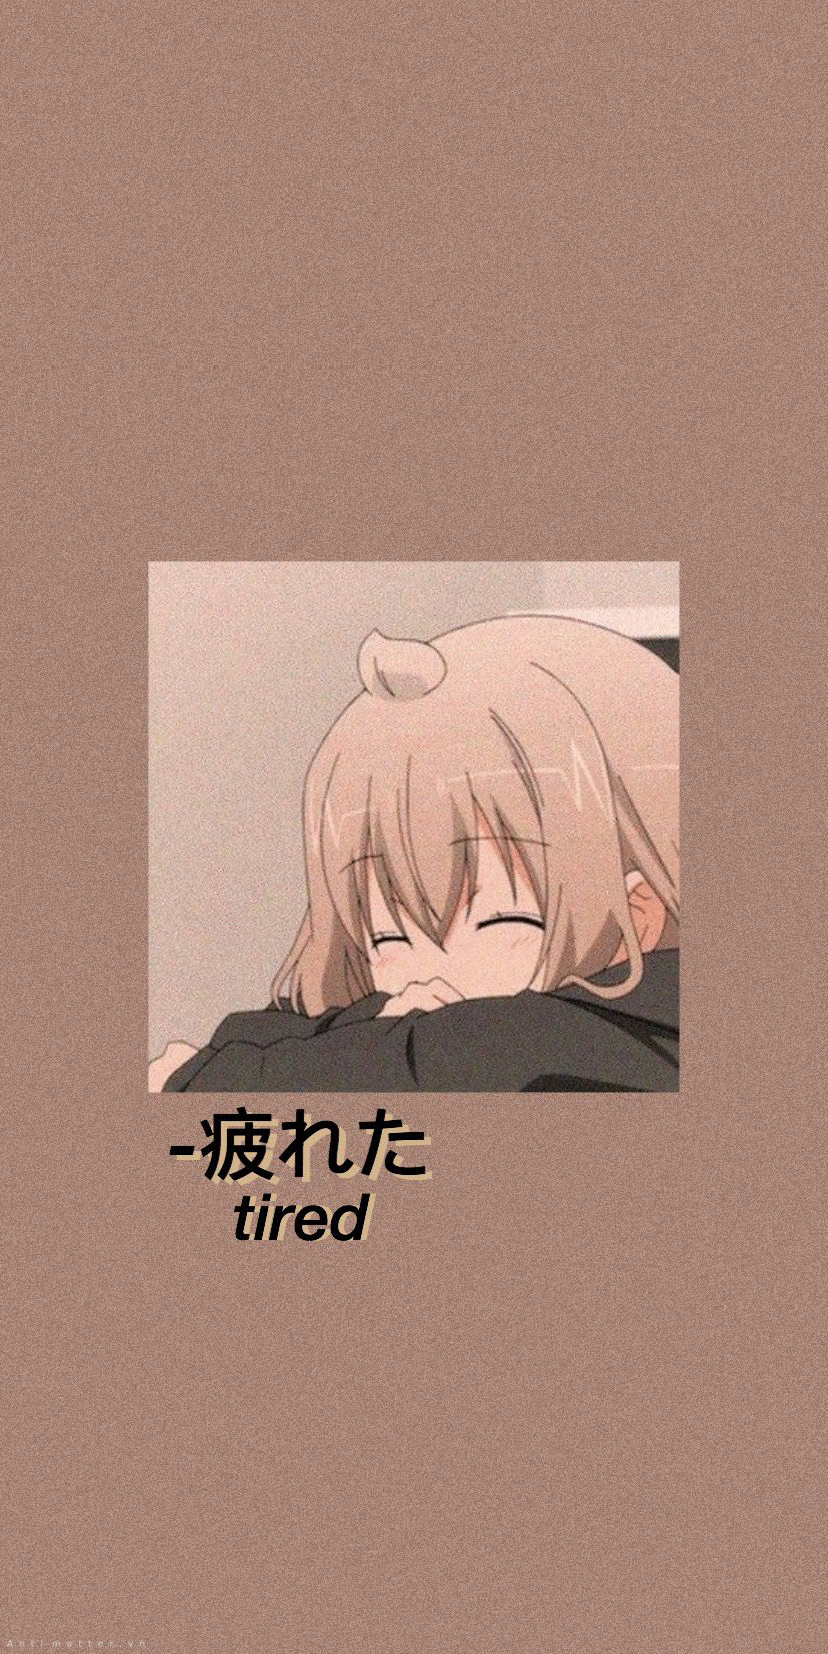 Tải xuống APK sad anime aesthetic wallpaper cho Android